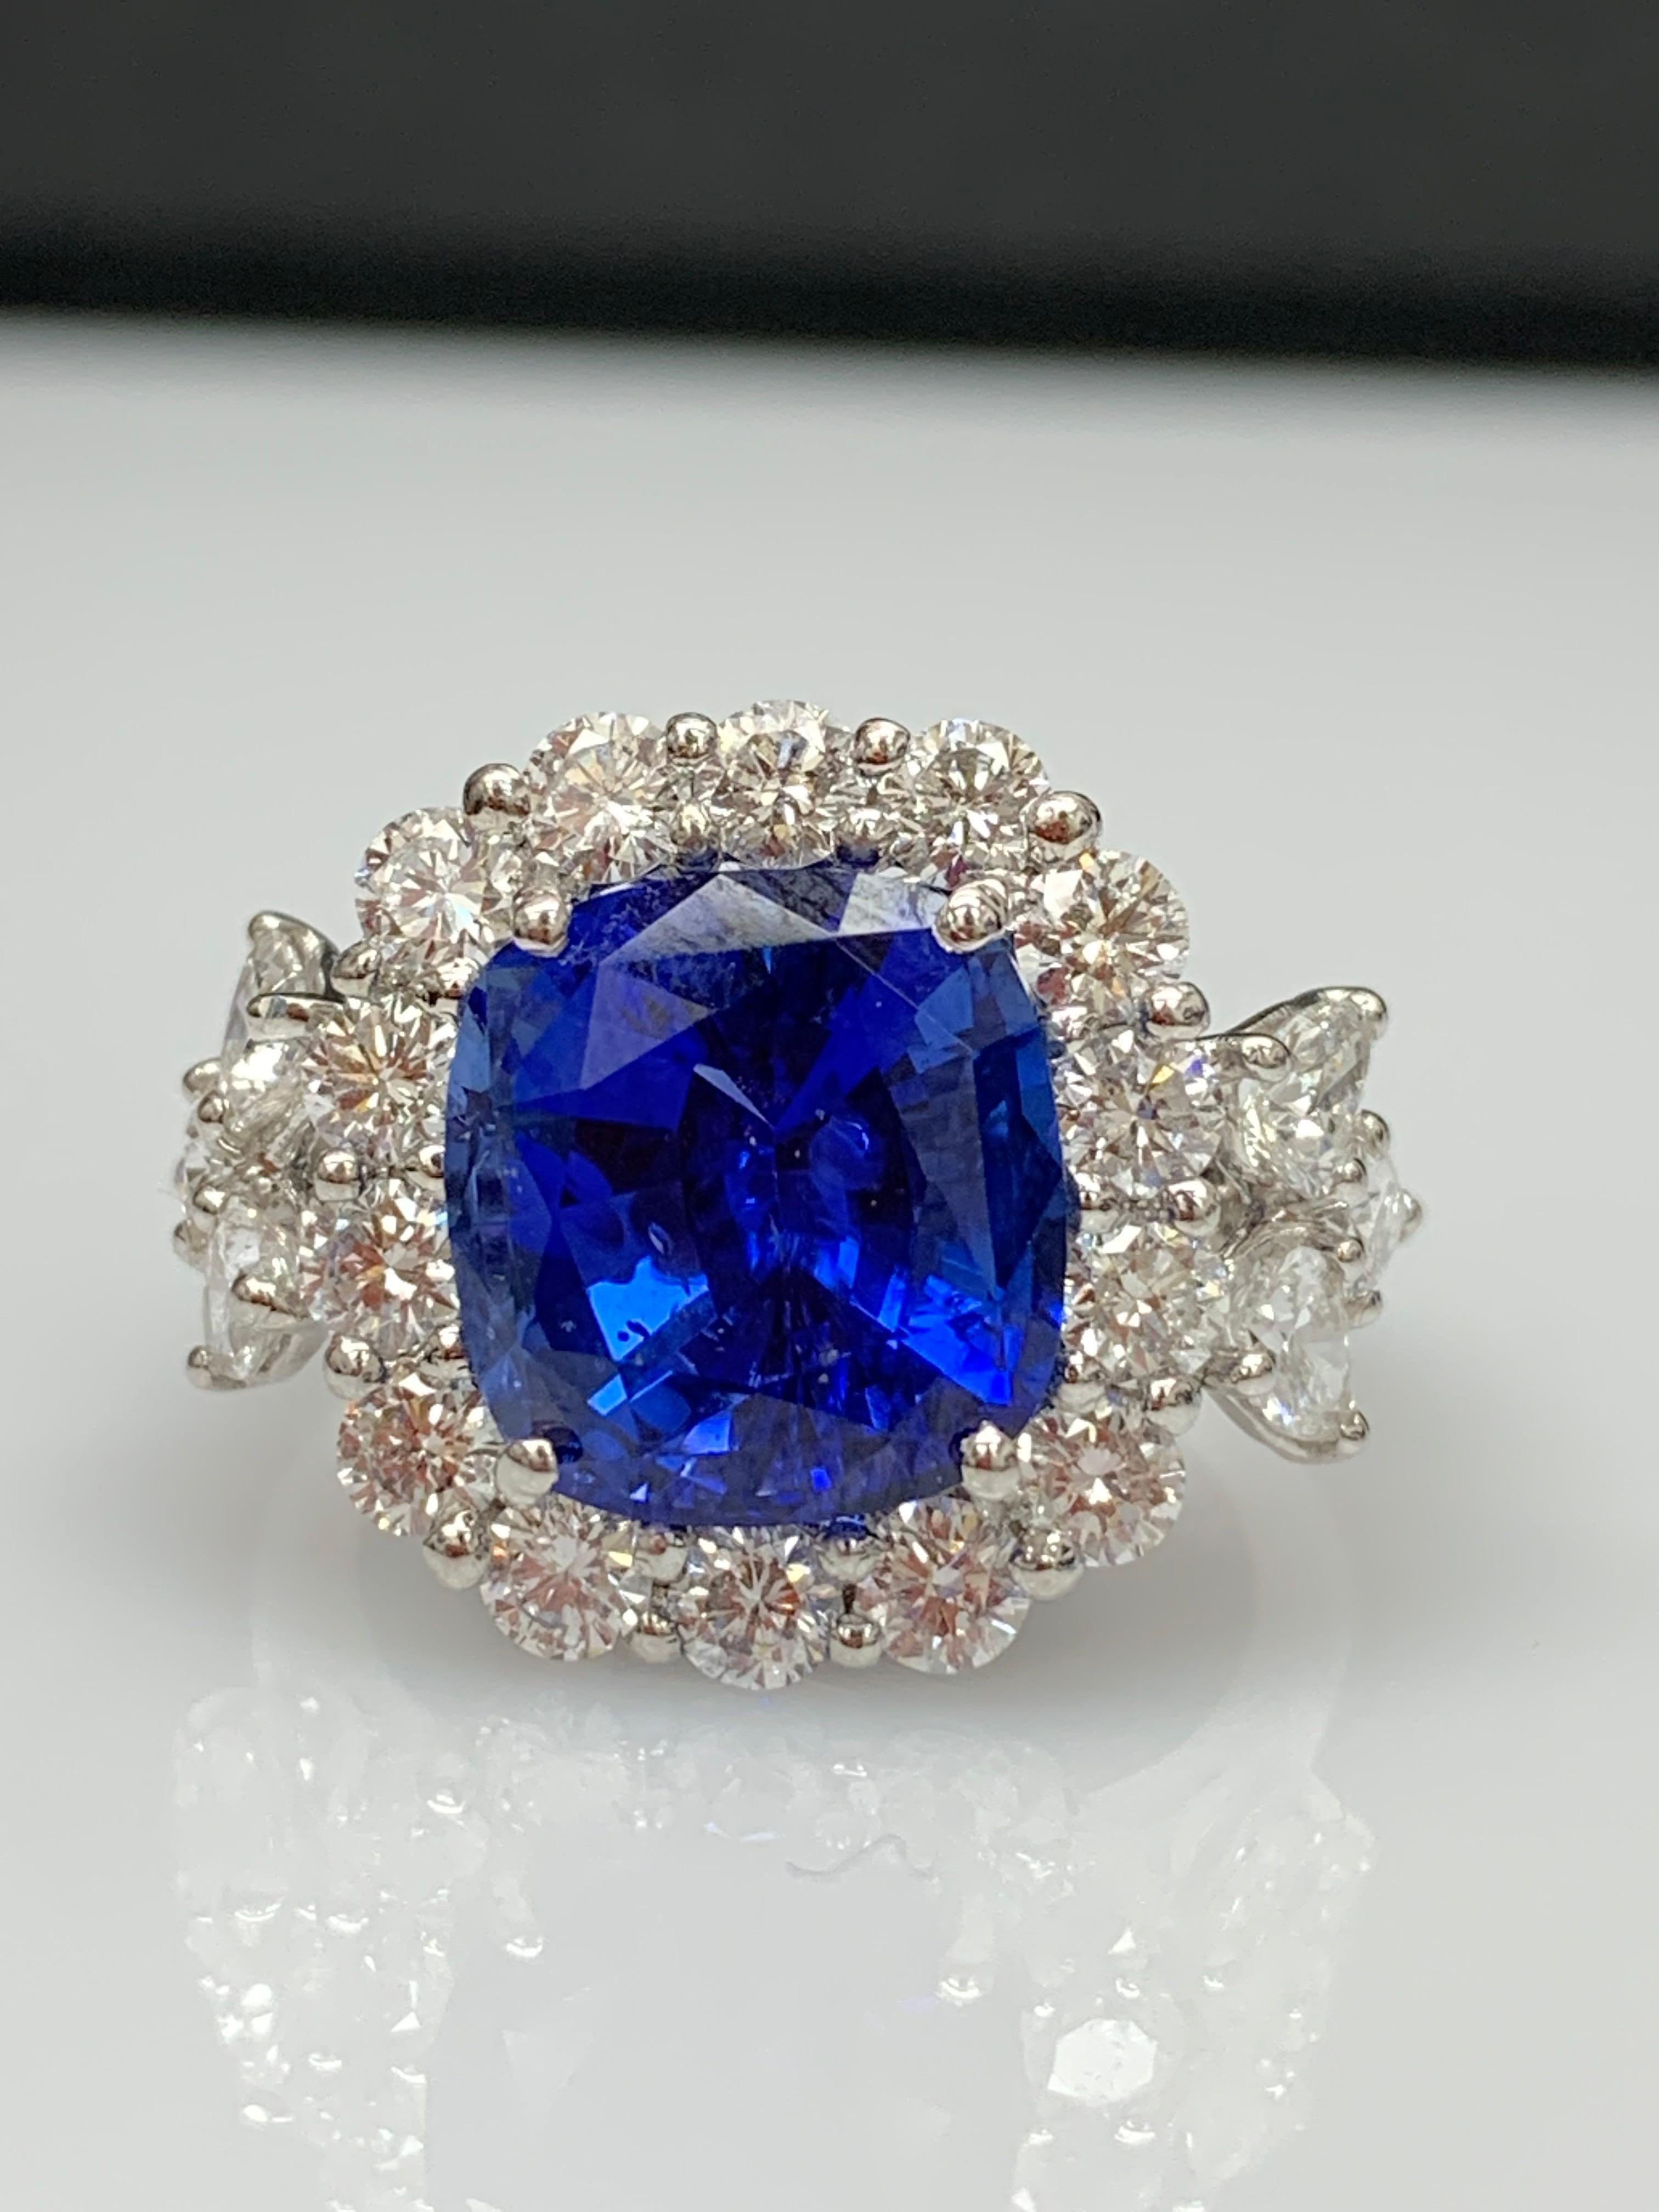 6.61 Carat Cushion Cut Blue Sapphire Diamond Engagement Ring in Platinum For Sale 8